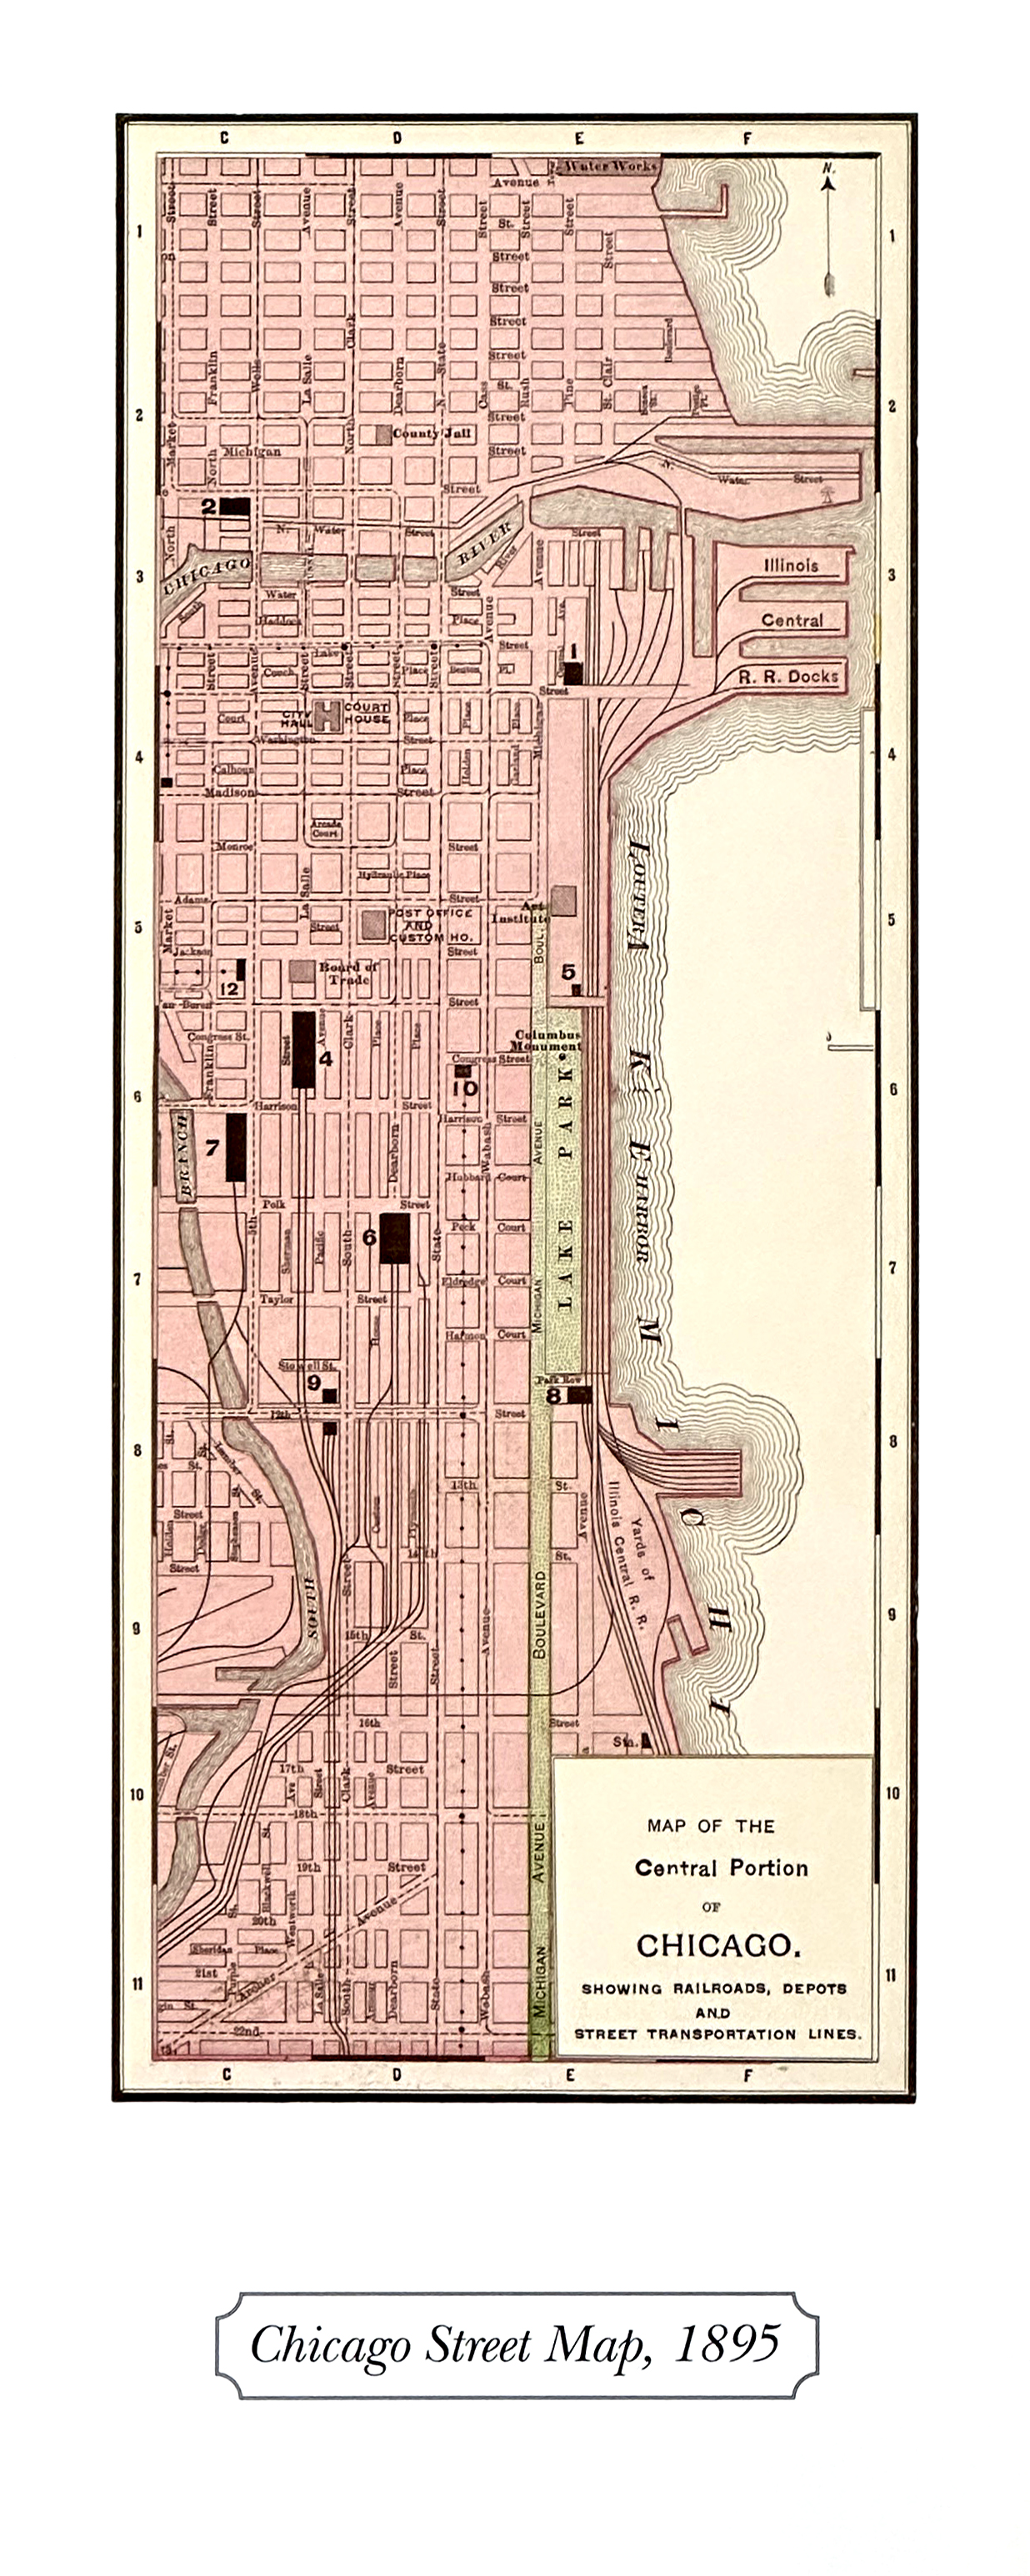 Chicago Street Map, 1898